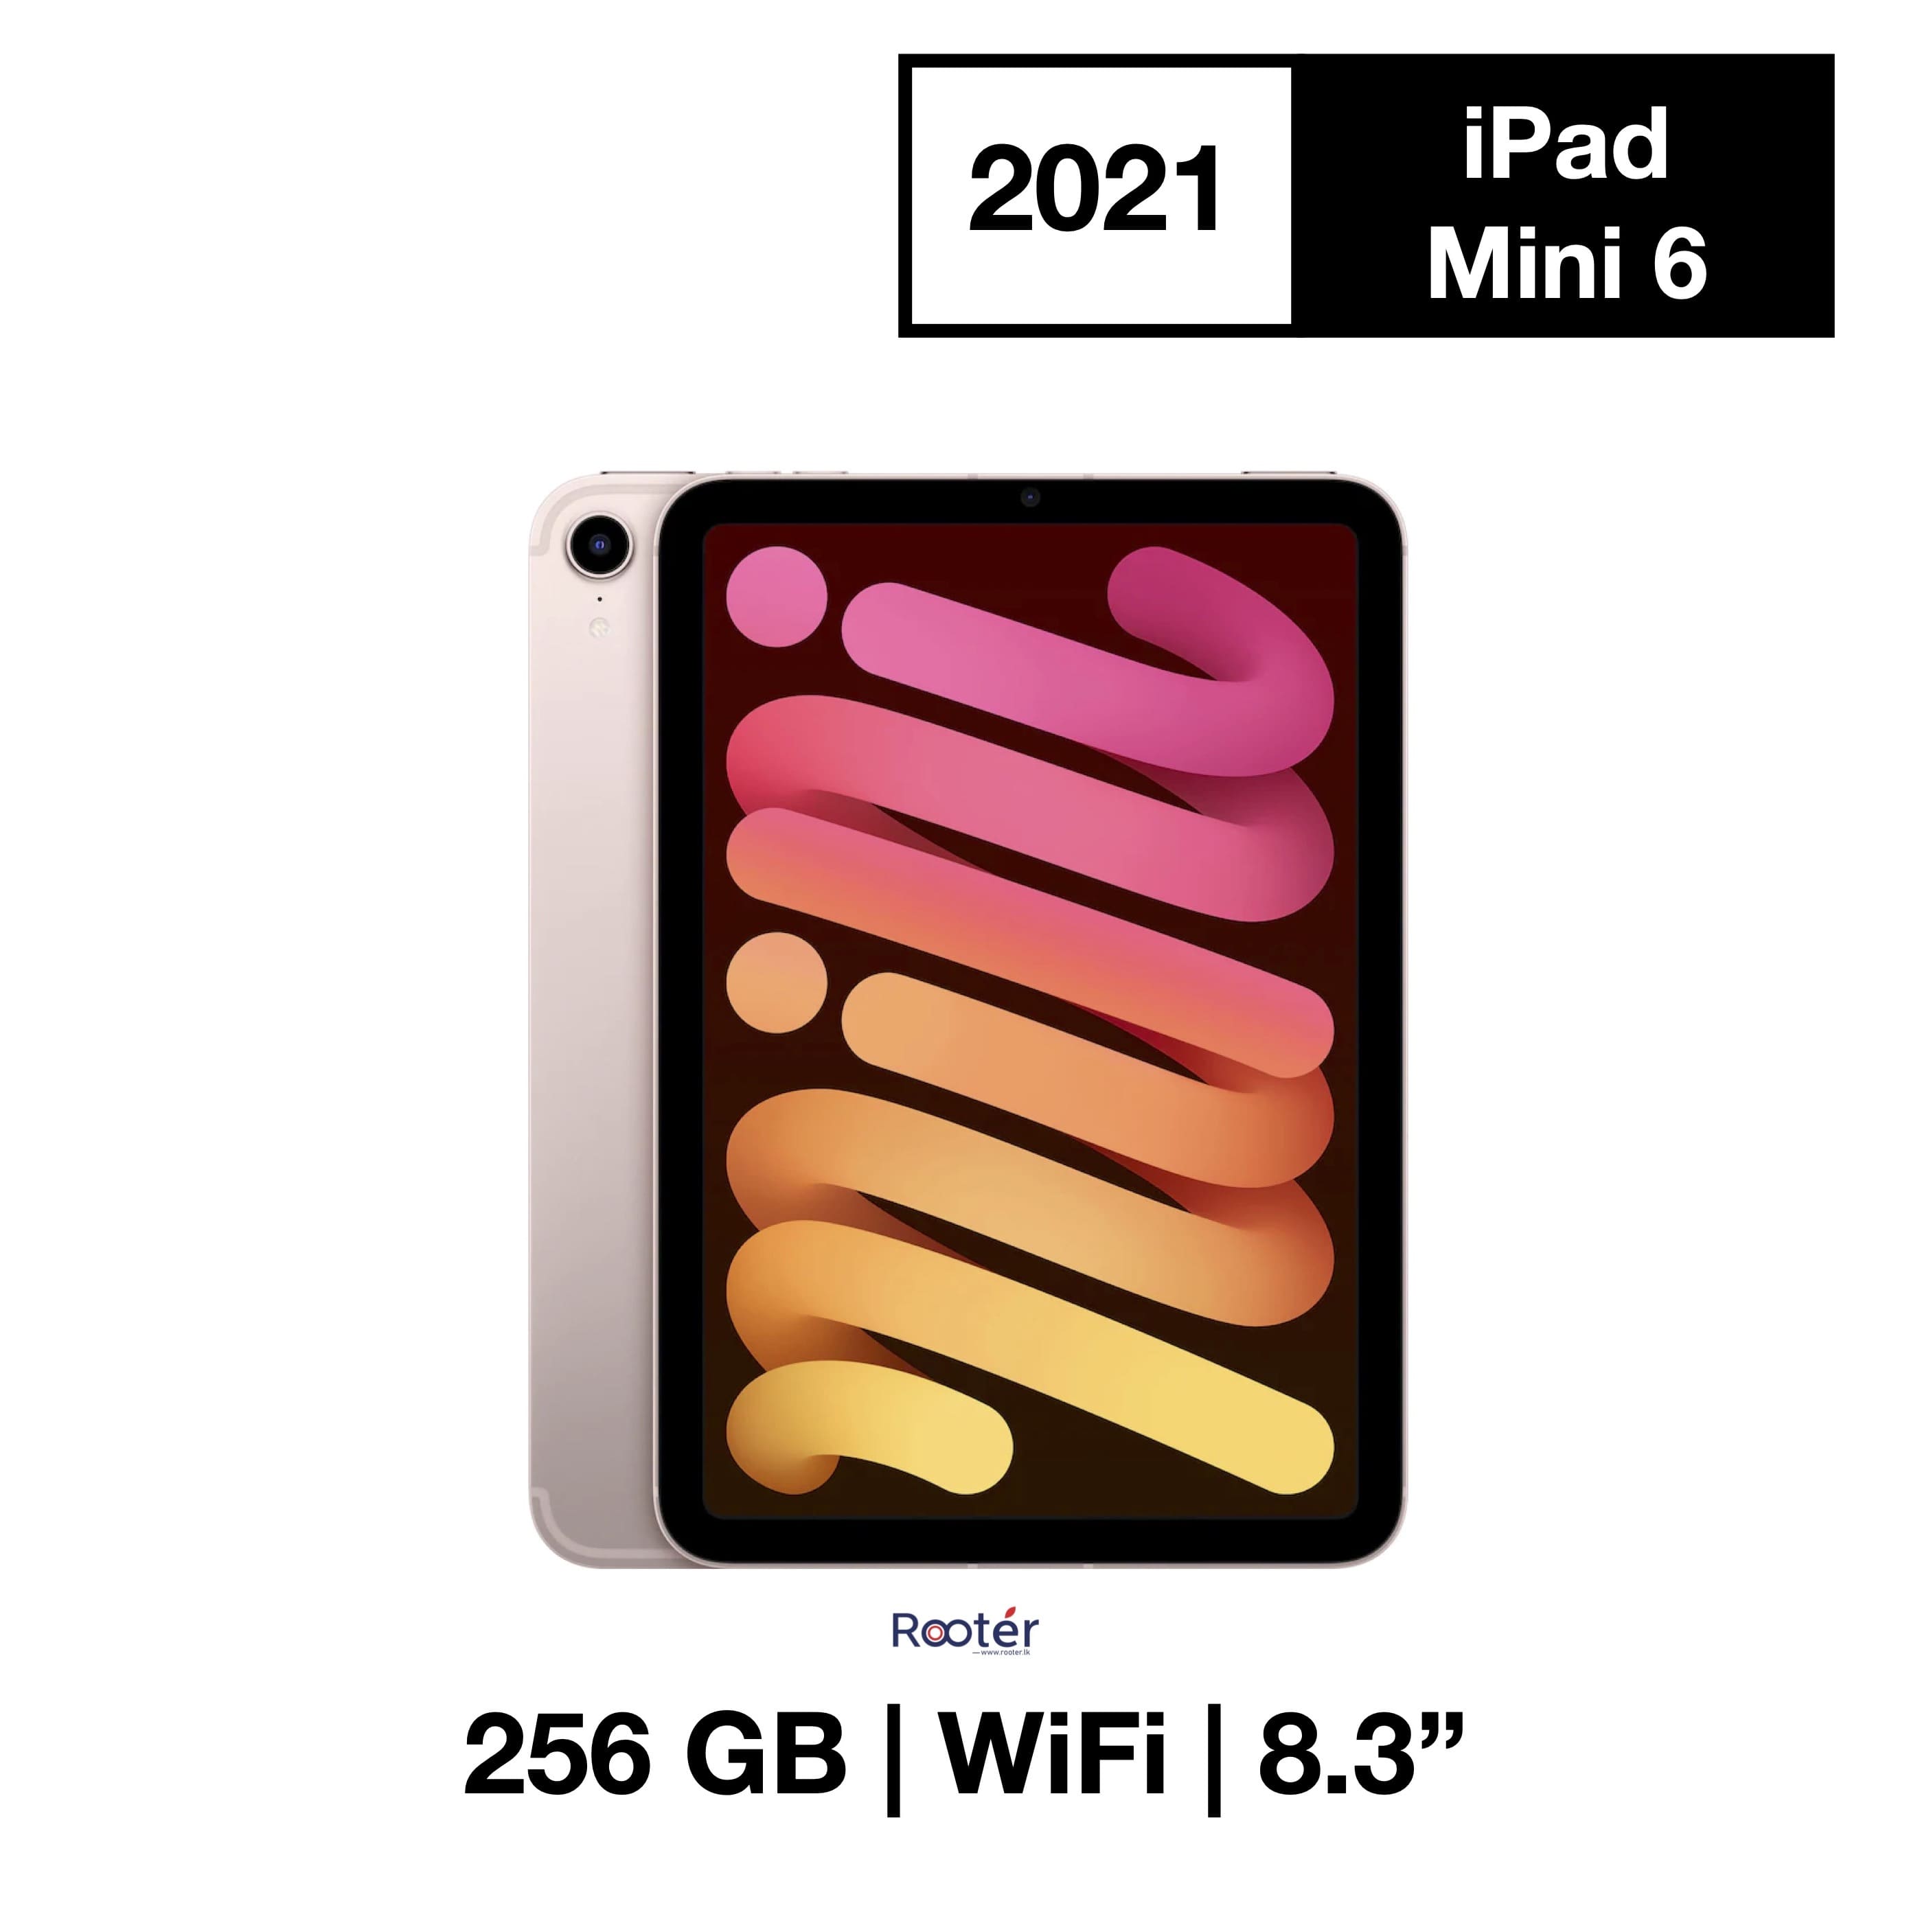 iPad air 4 256GB WiFi 10.9 inches